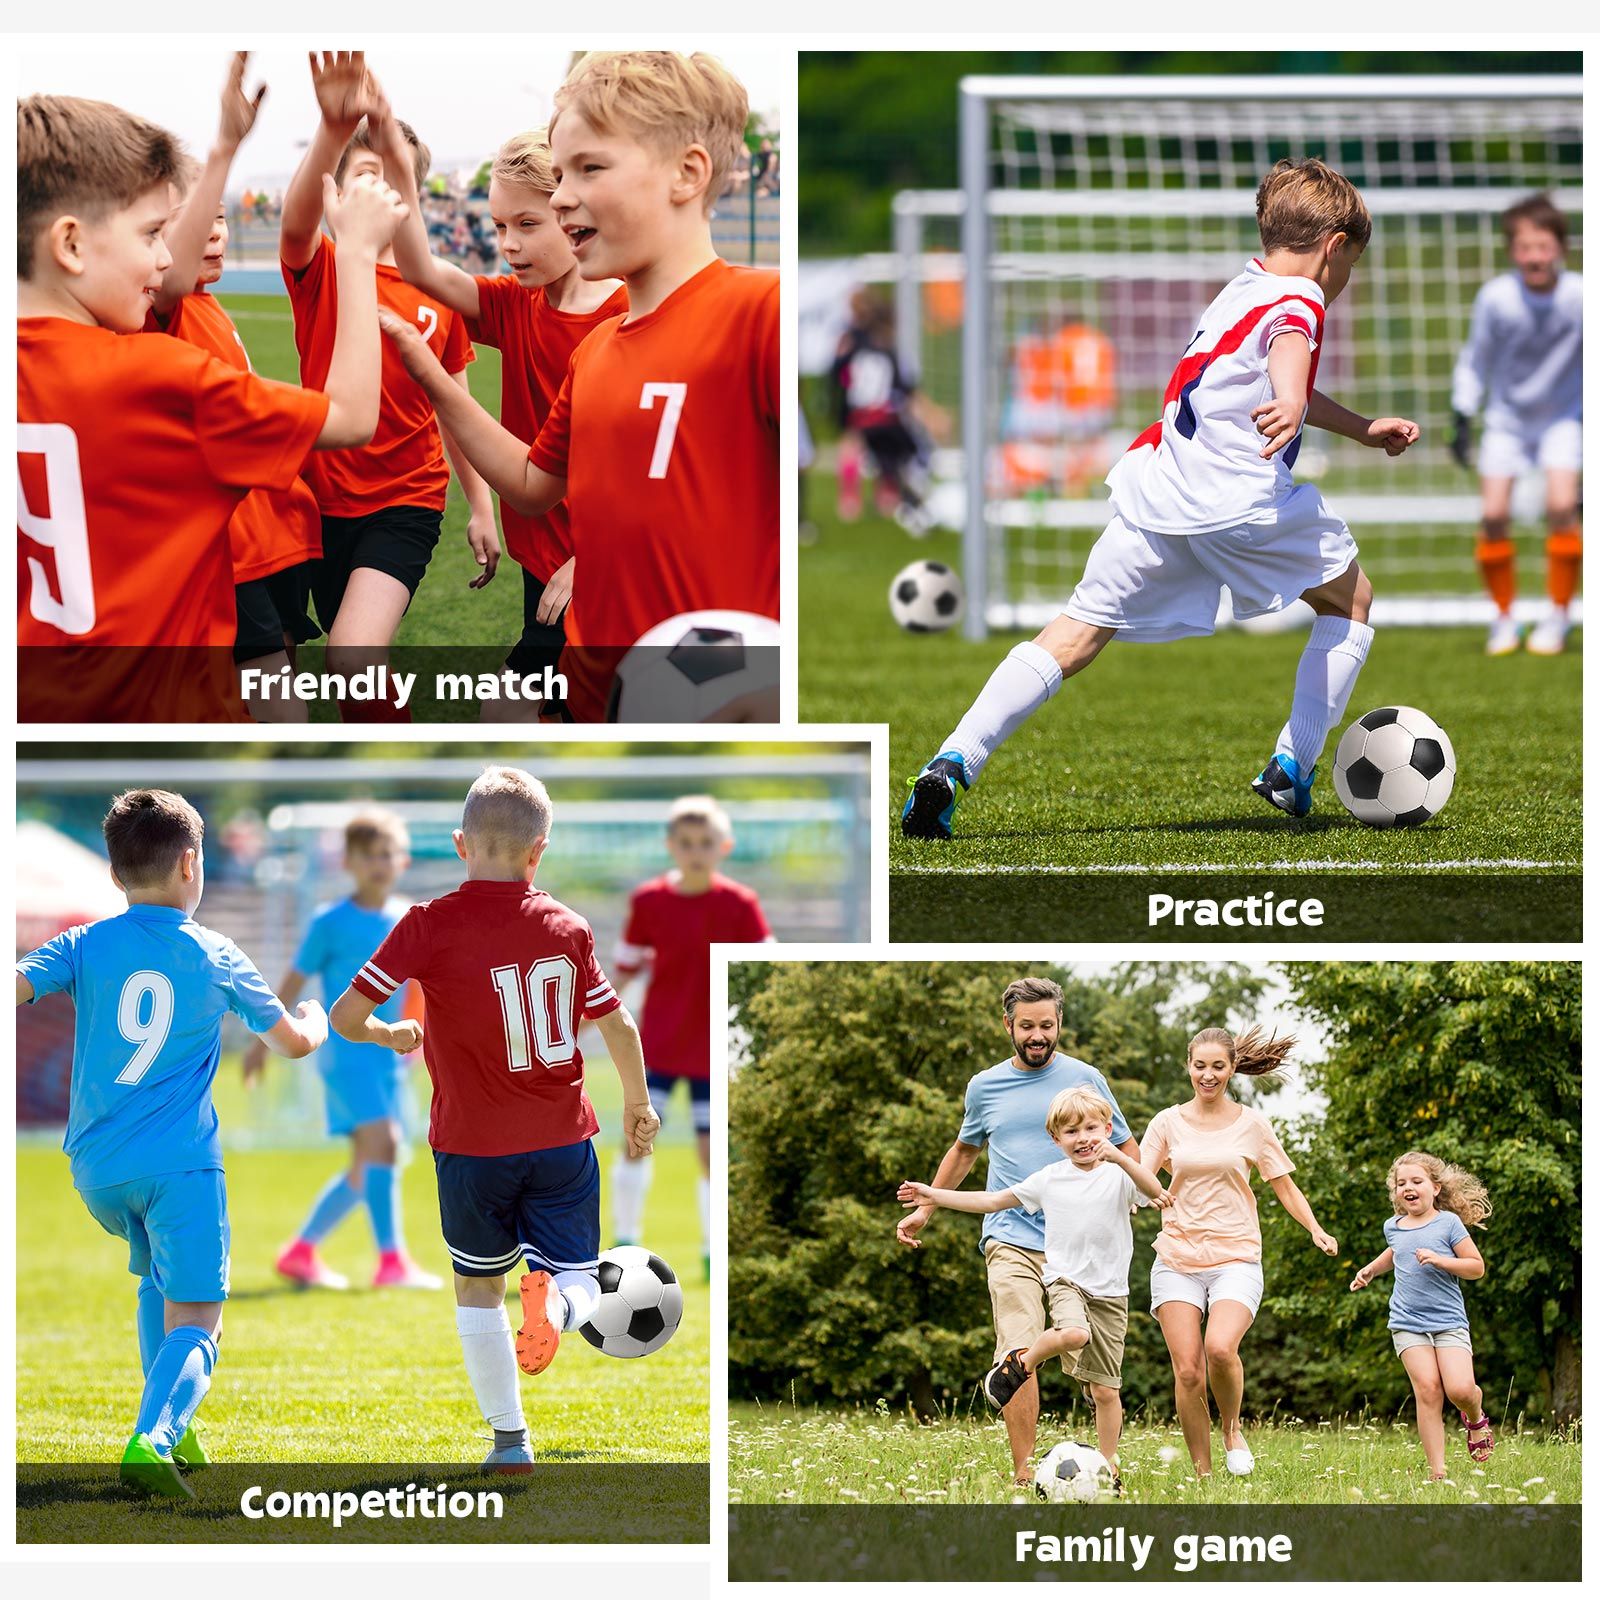 Soccer Goal Football Net Set Metal Frame Backyard Game Training Practice Outdoor Park Sports Match Kids Adults Youth 1.83x1.22m